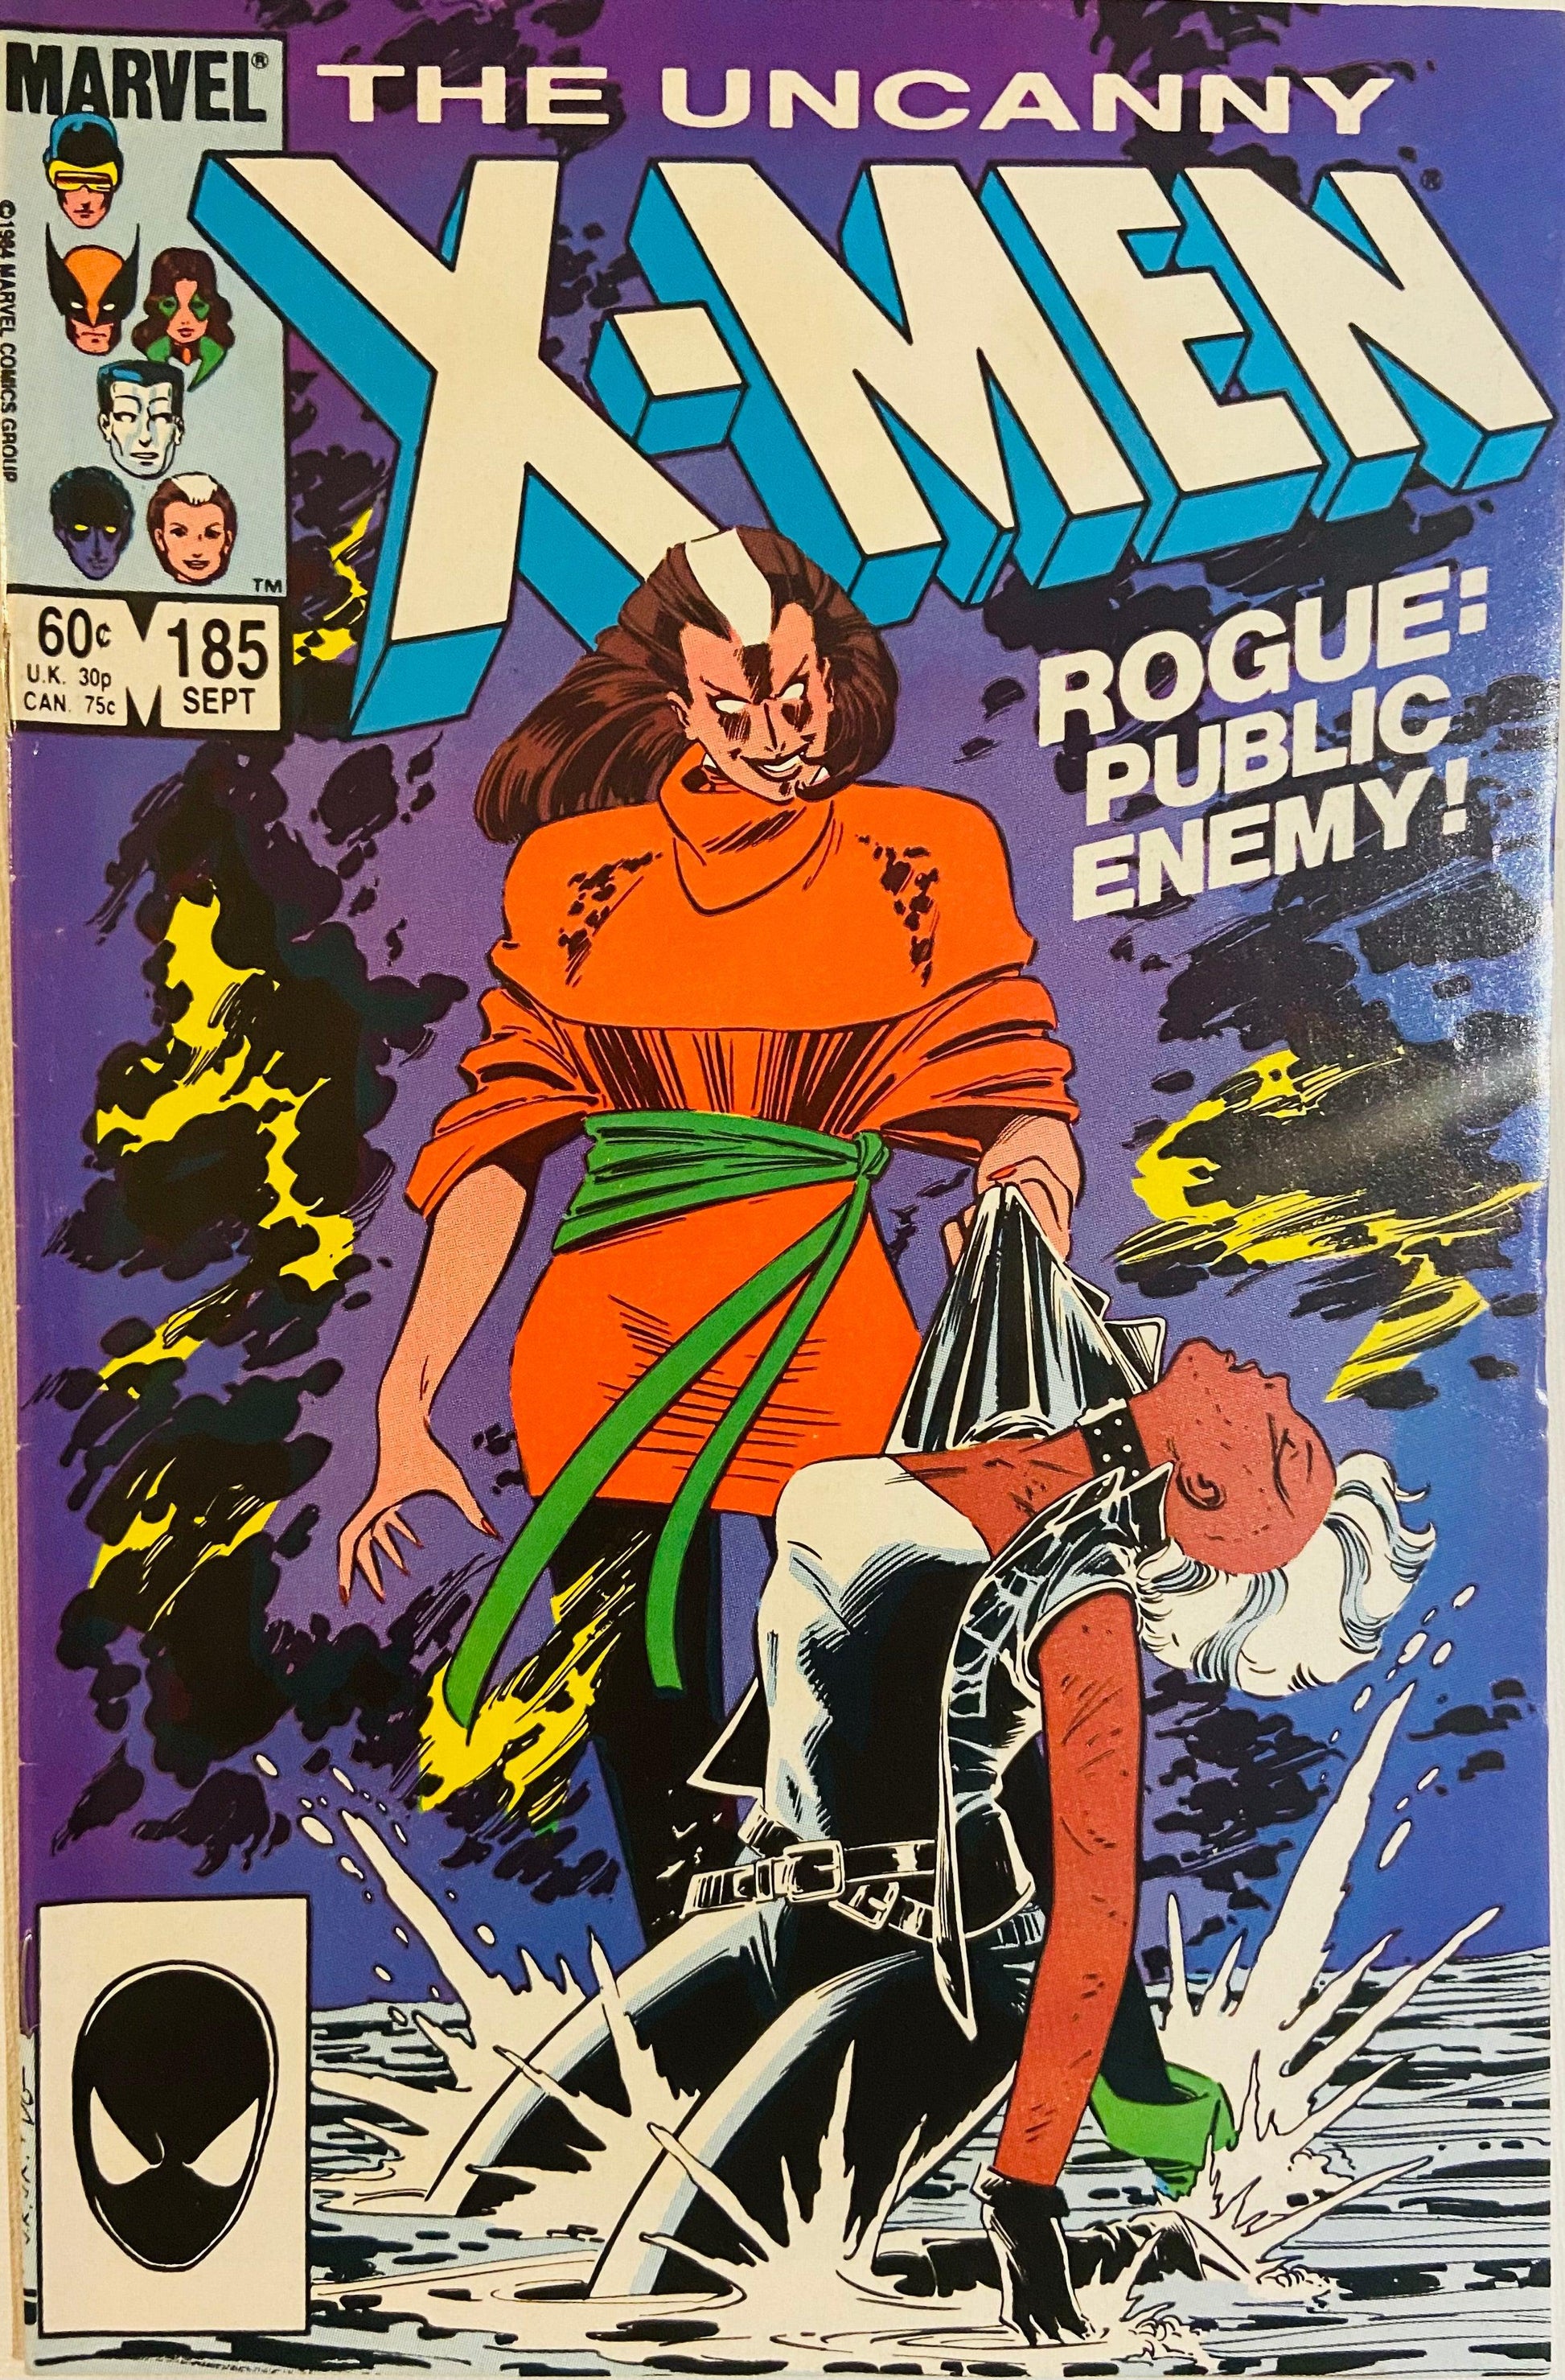 Uncanny X-men #185 - HolyGrail Comix